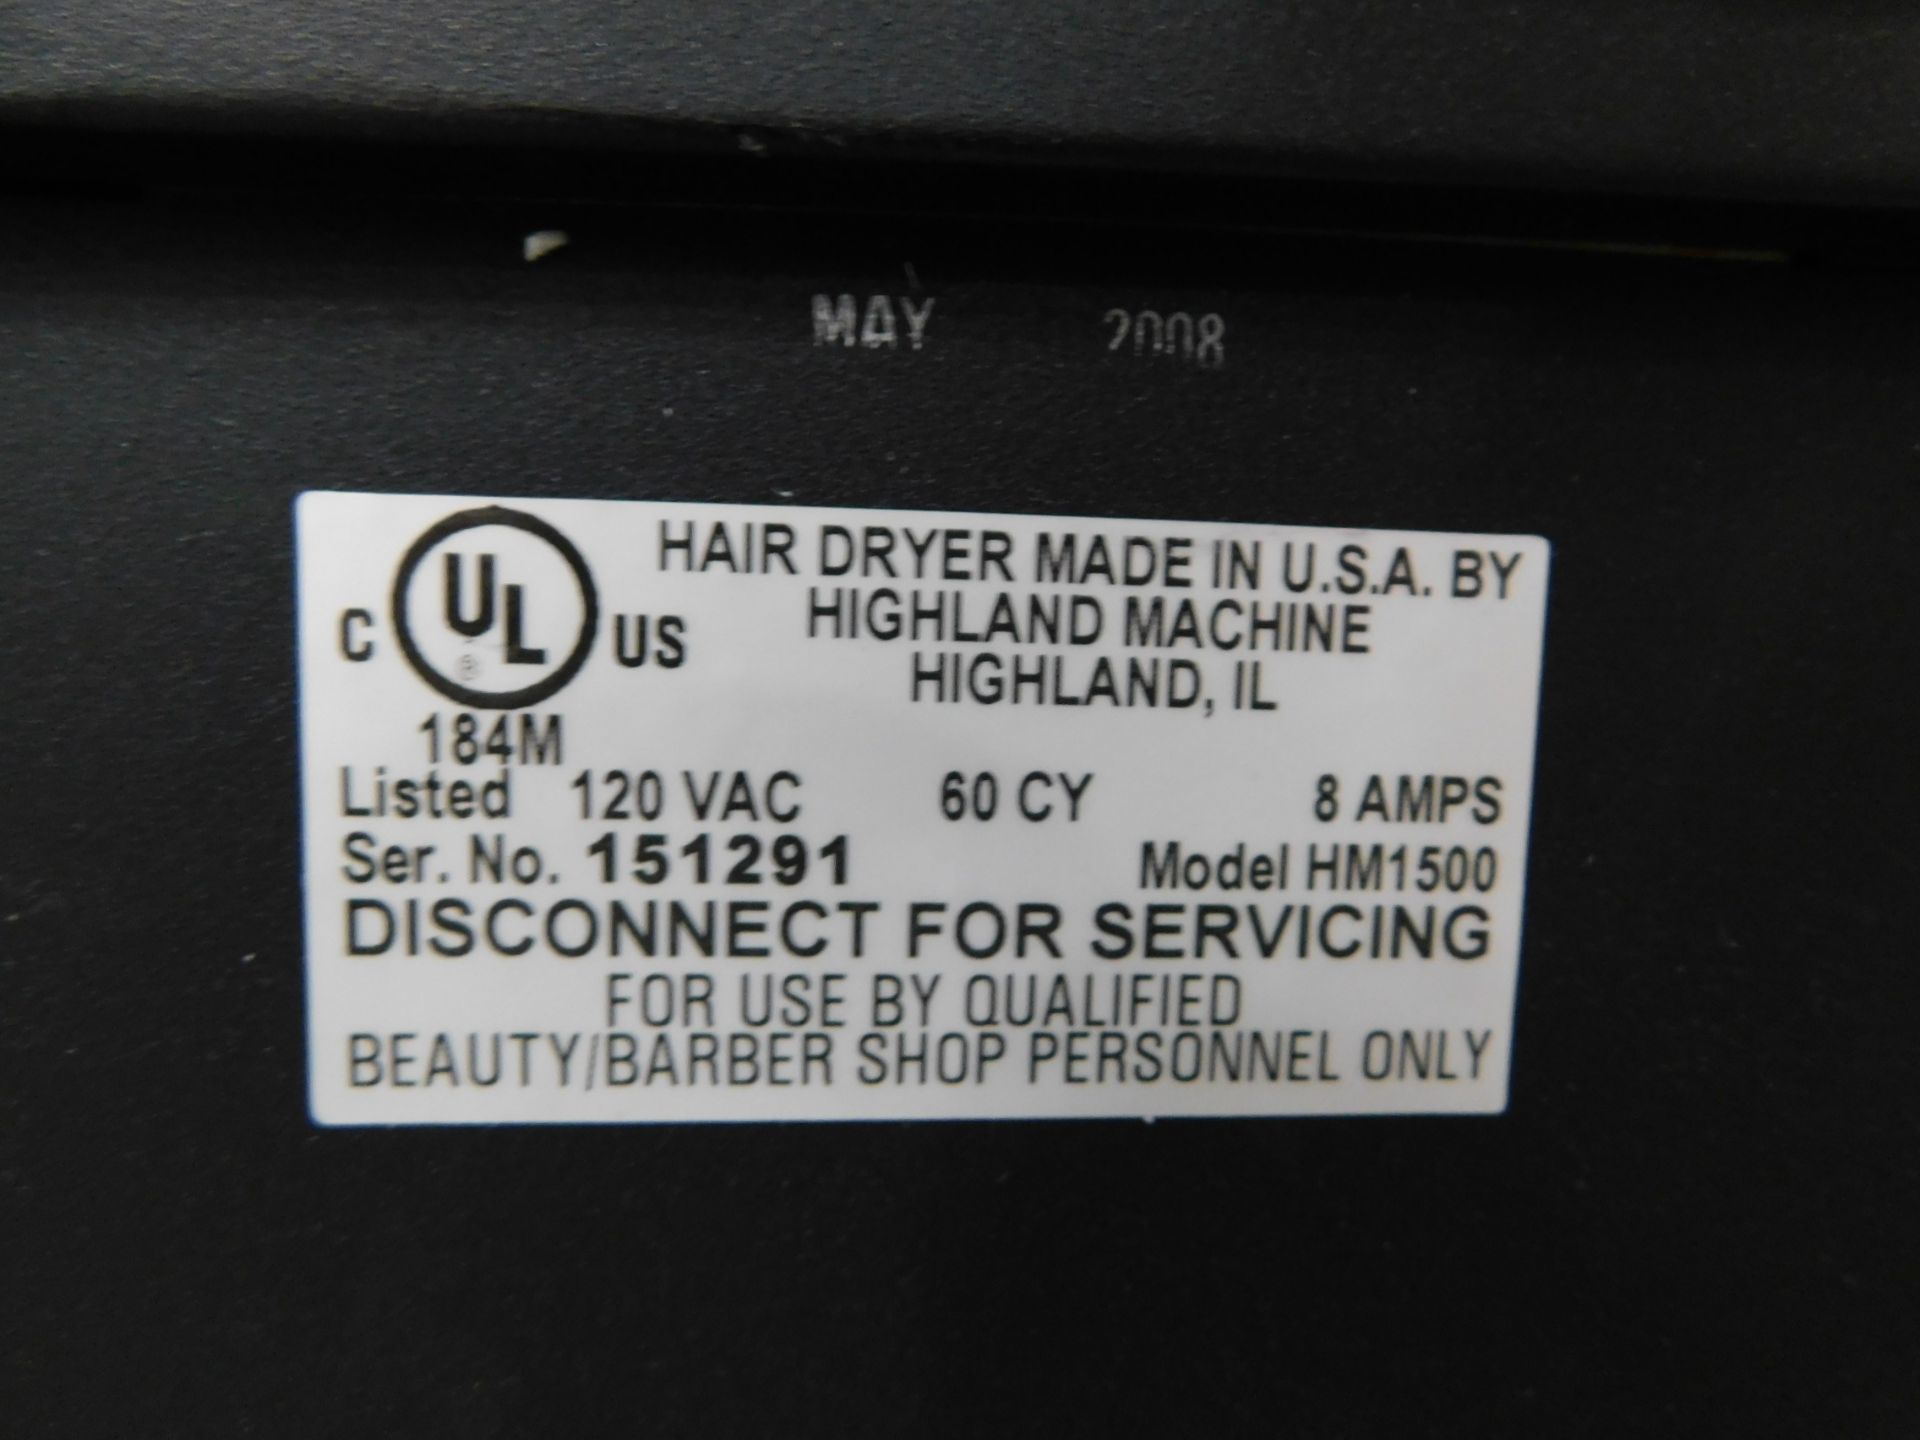 Highland Model HM1500 Commercial Hair Dryer, s/n 151291 - Image 6 of 6